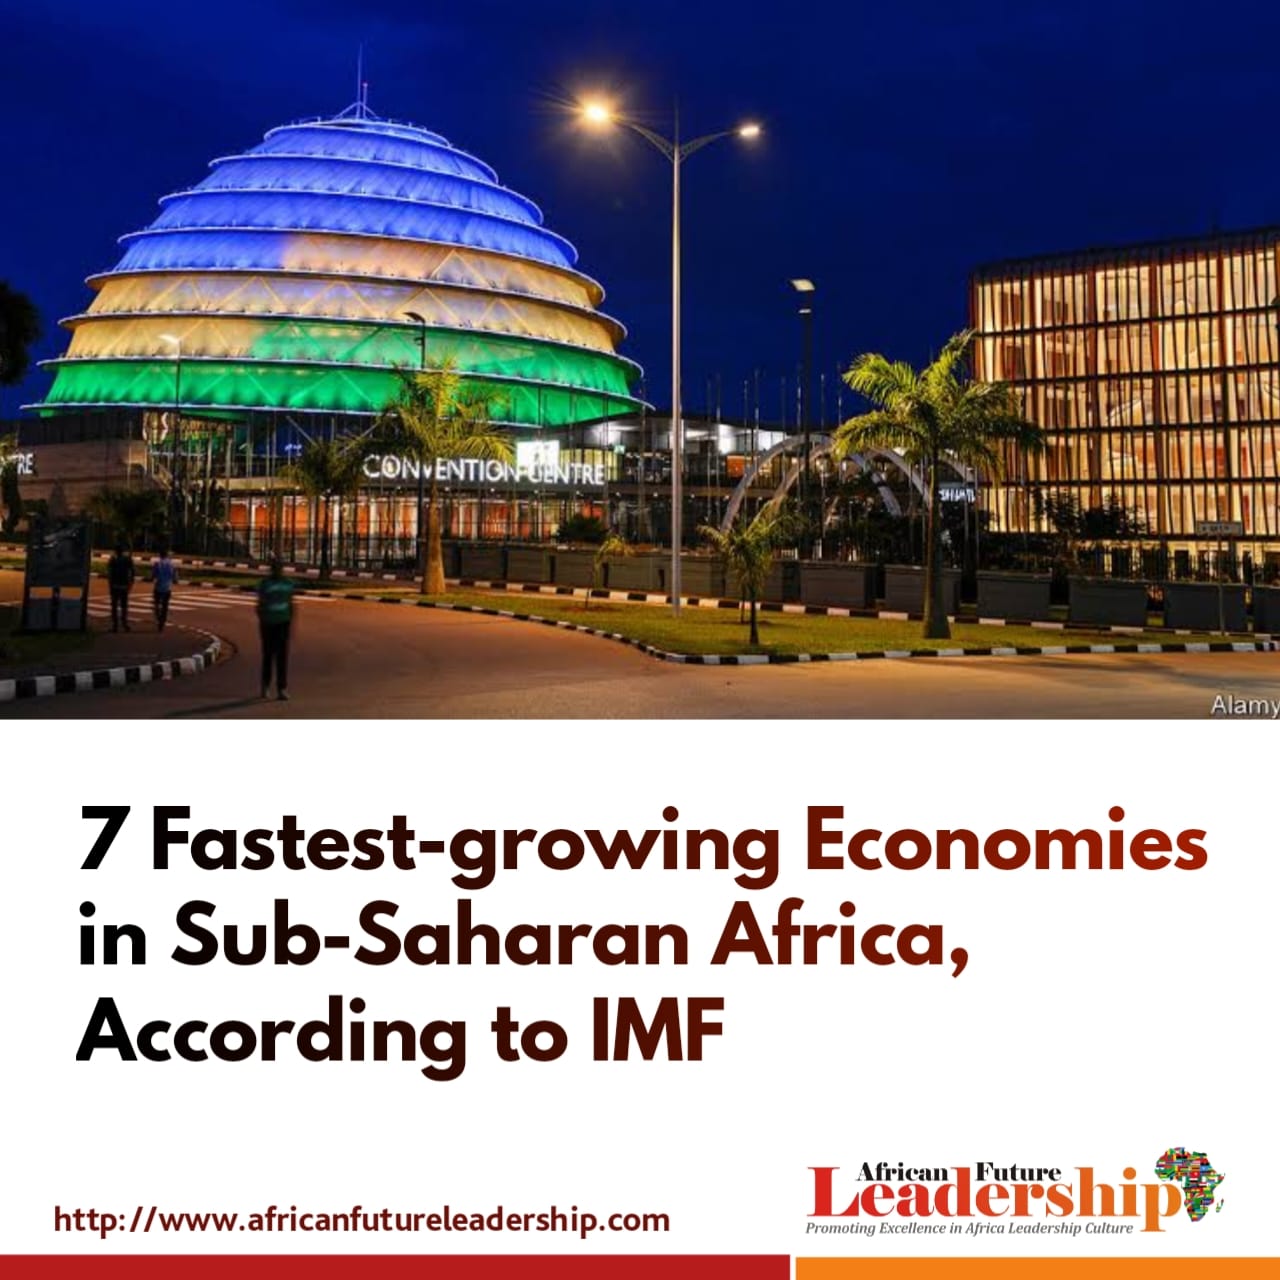 7 Fastest-growing Economies in Sub-Saharan Africa, According to IMF